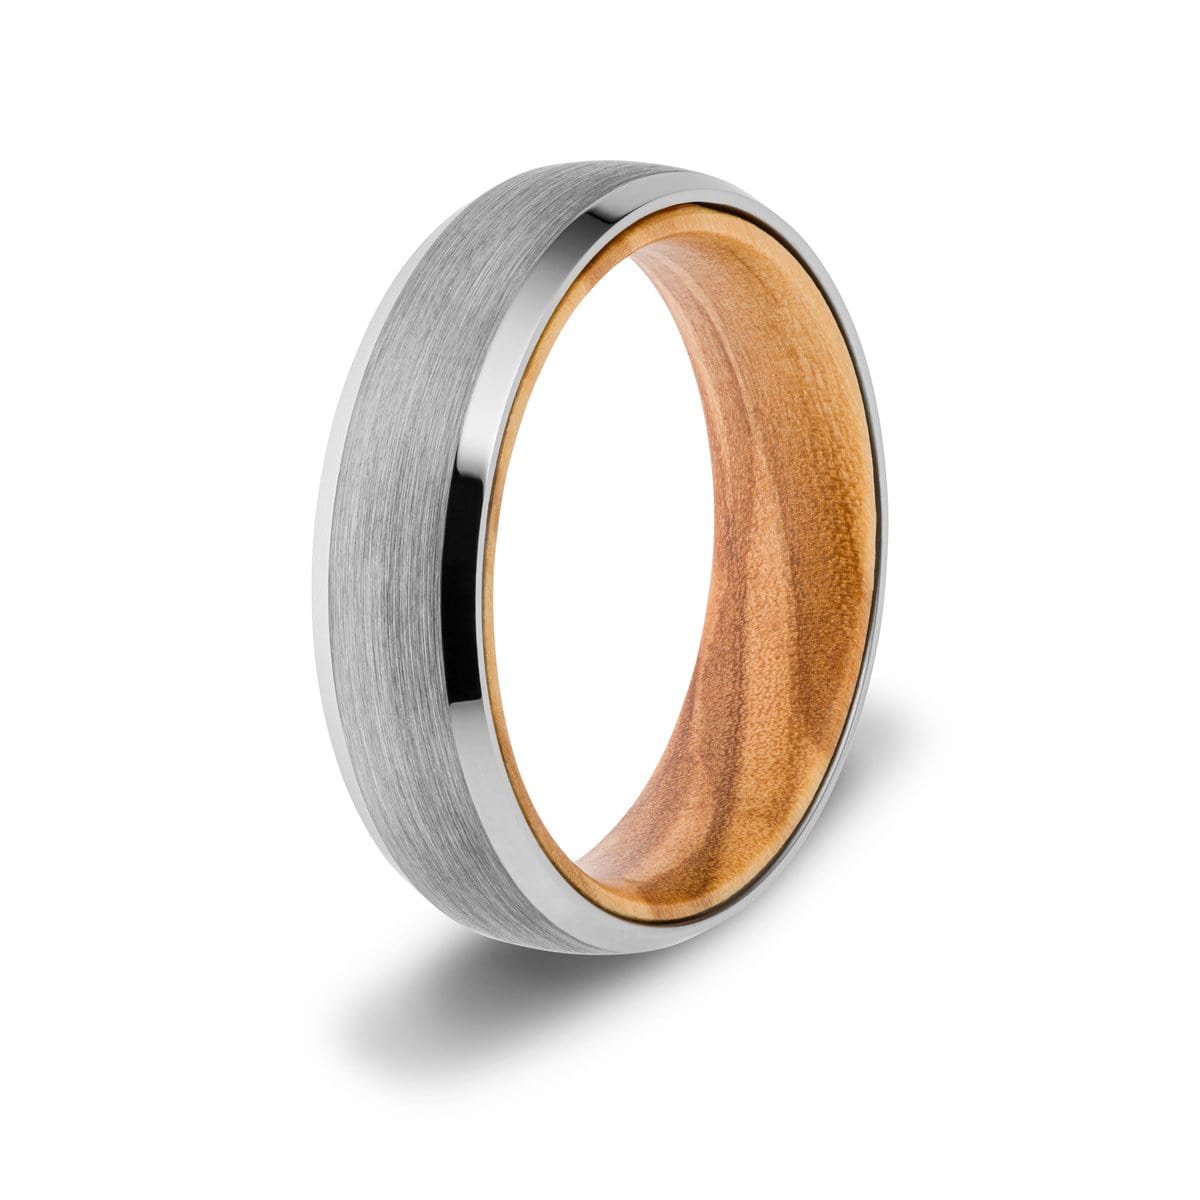 Buy Australian Wood Rings Online - ETRNL